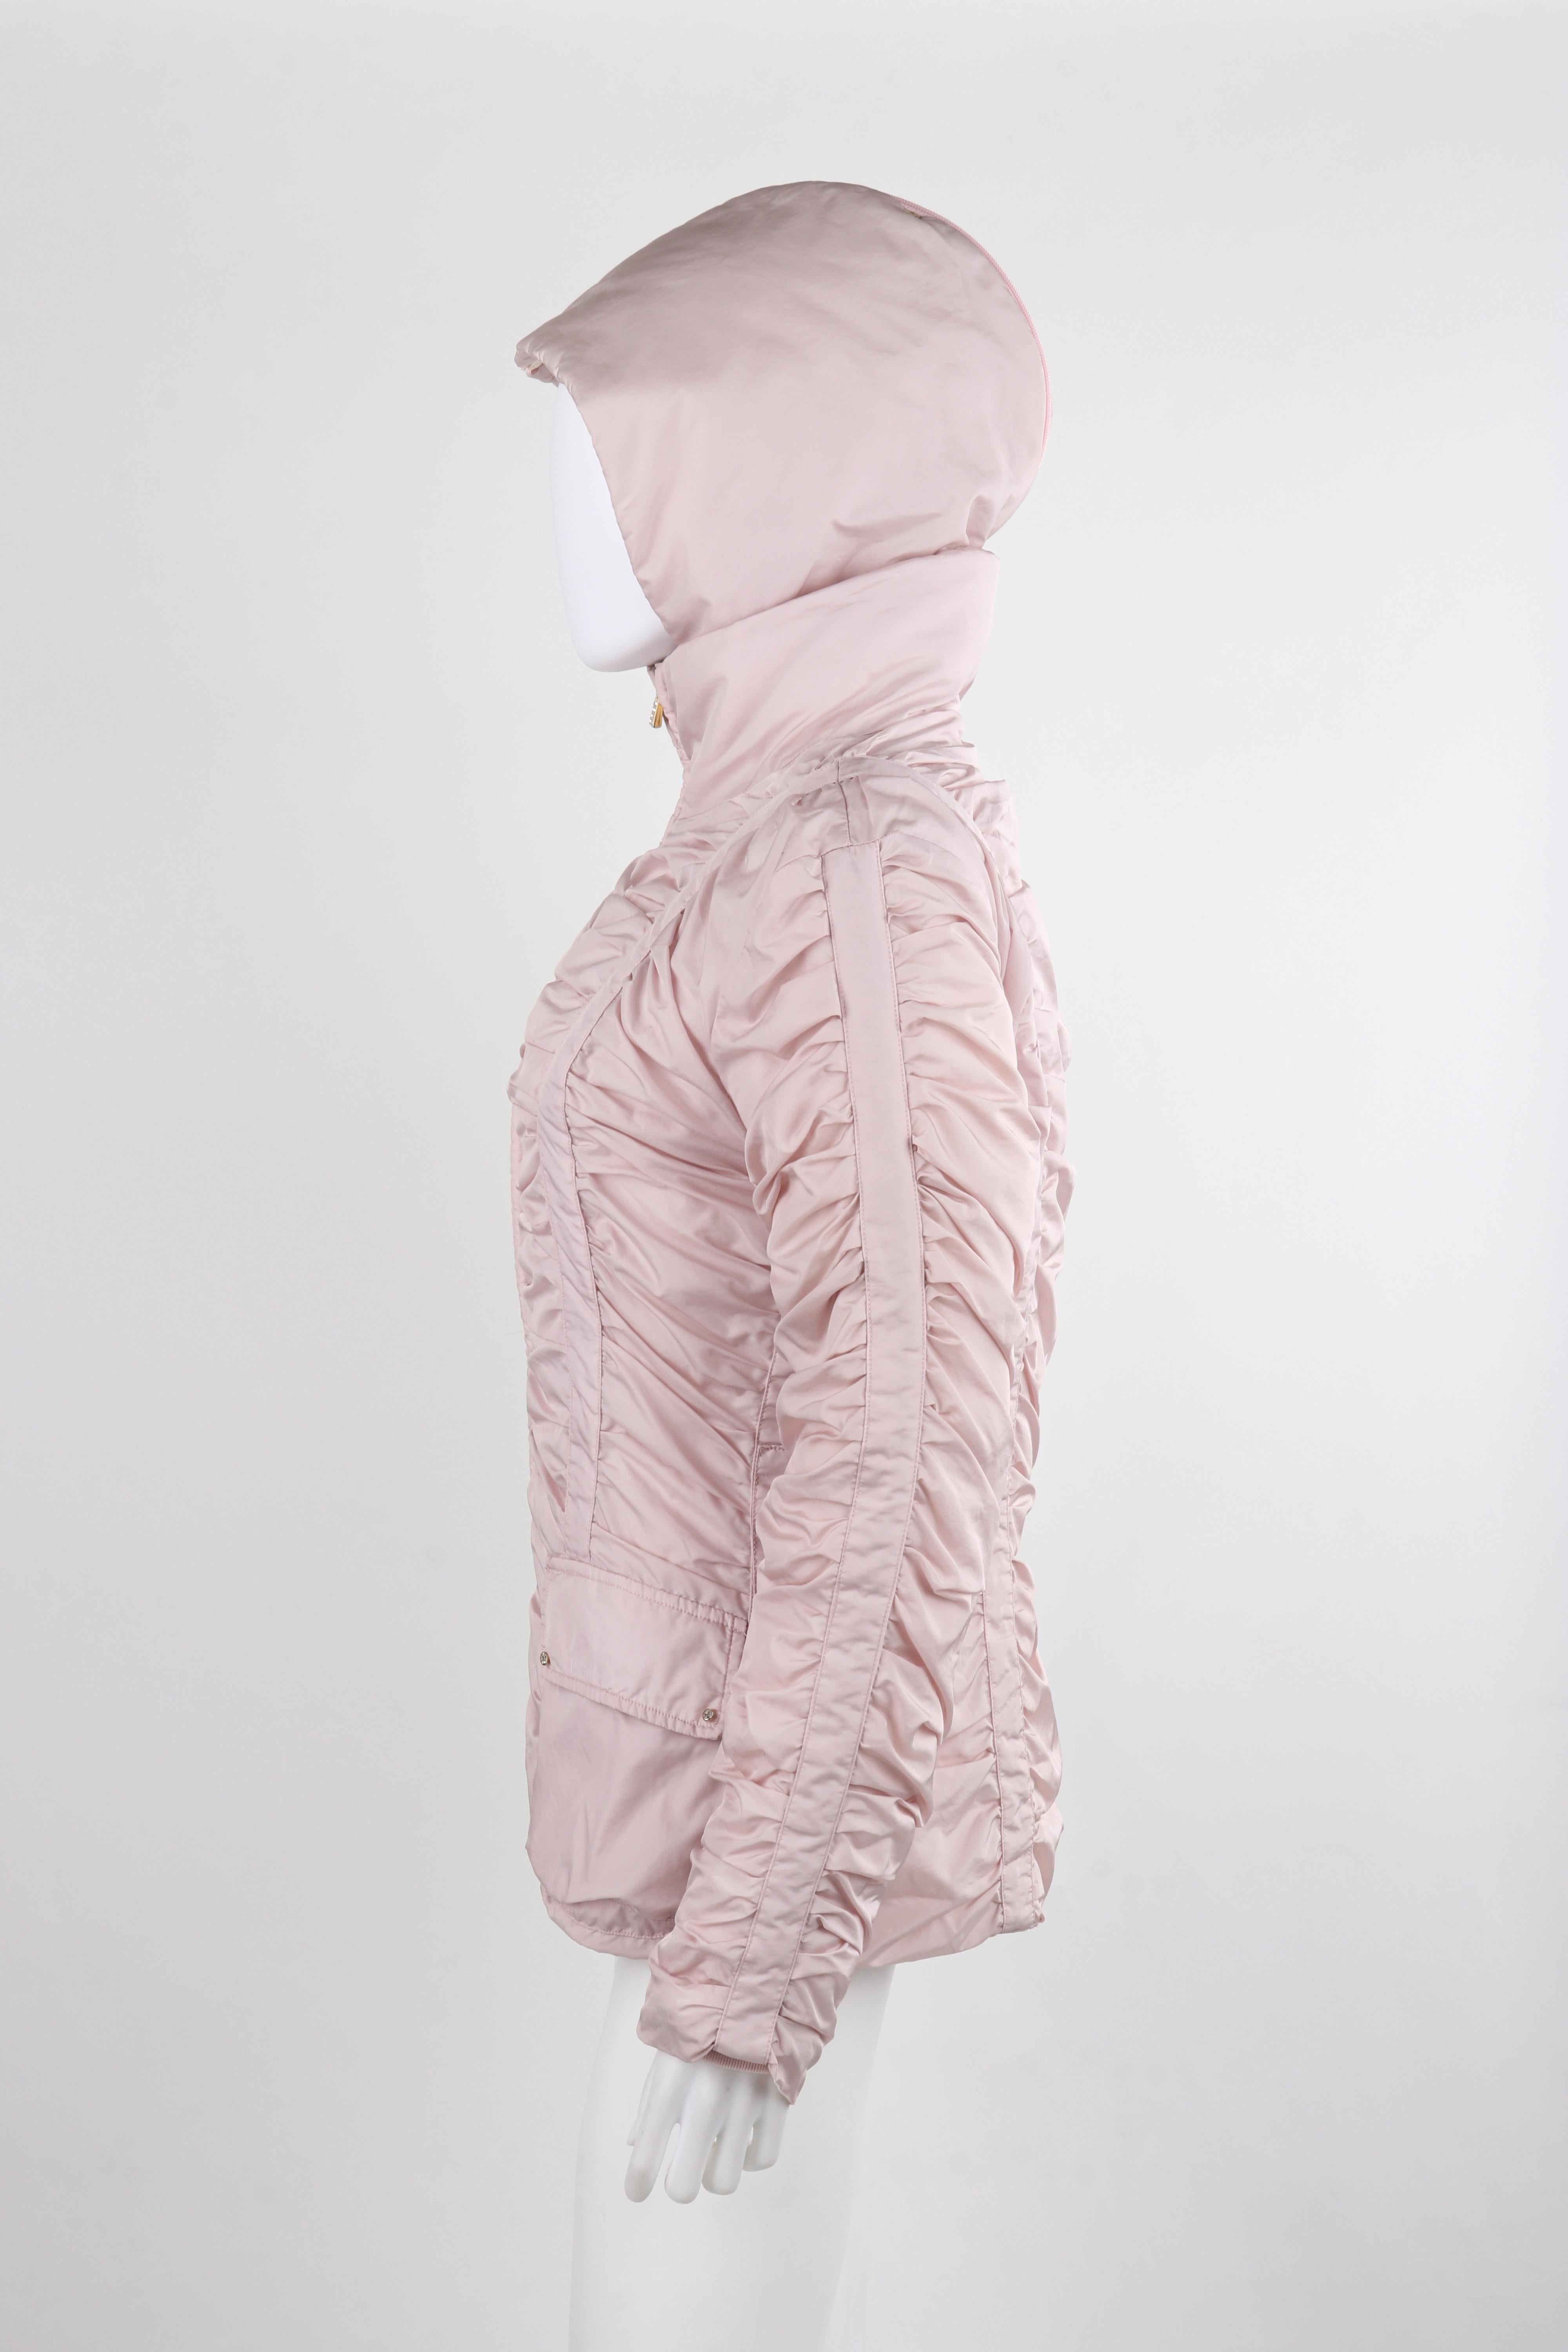 ALEXANDER McQUEEN c.1990's Vtg Pink Ruched Hooded Zip Up Puffer Jacket Coat For Sale 4